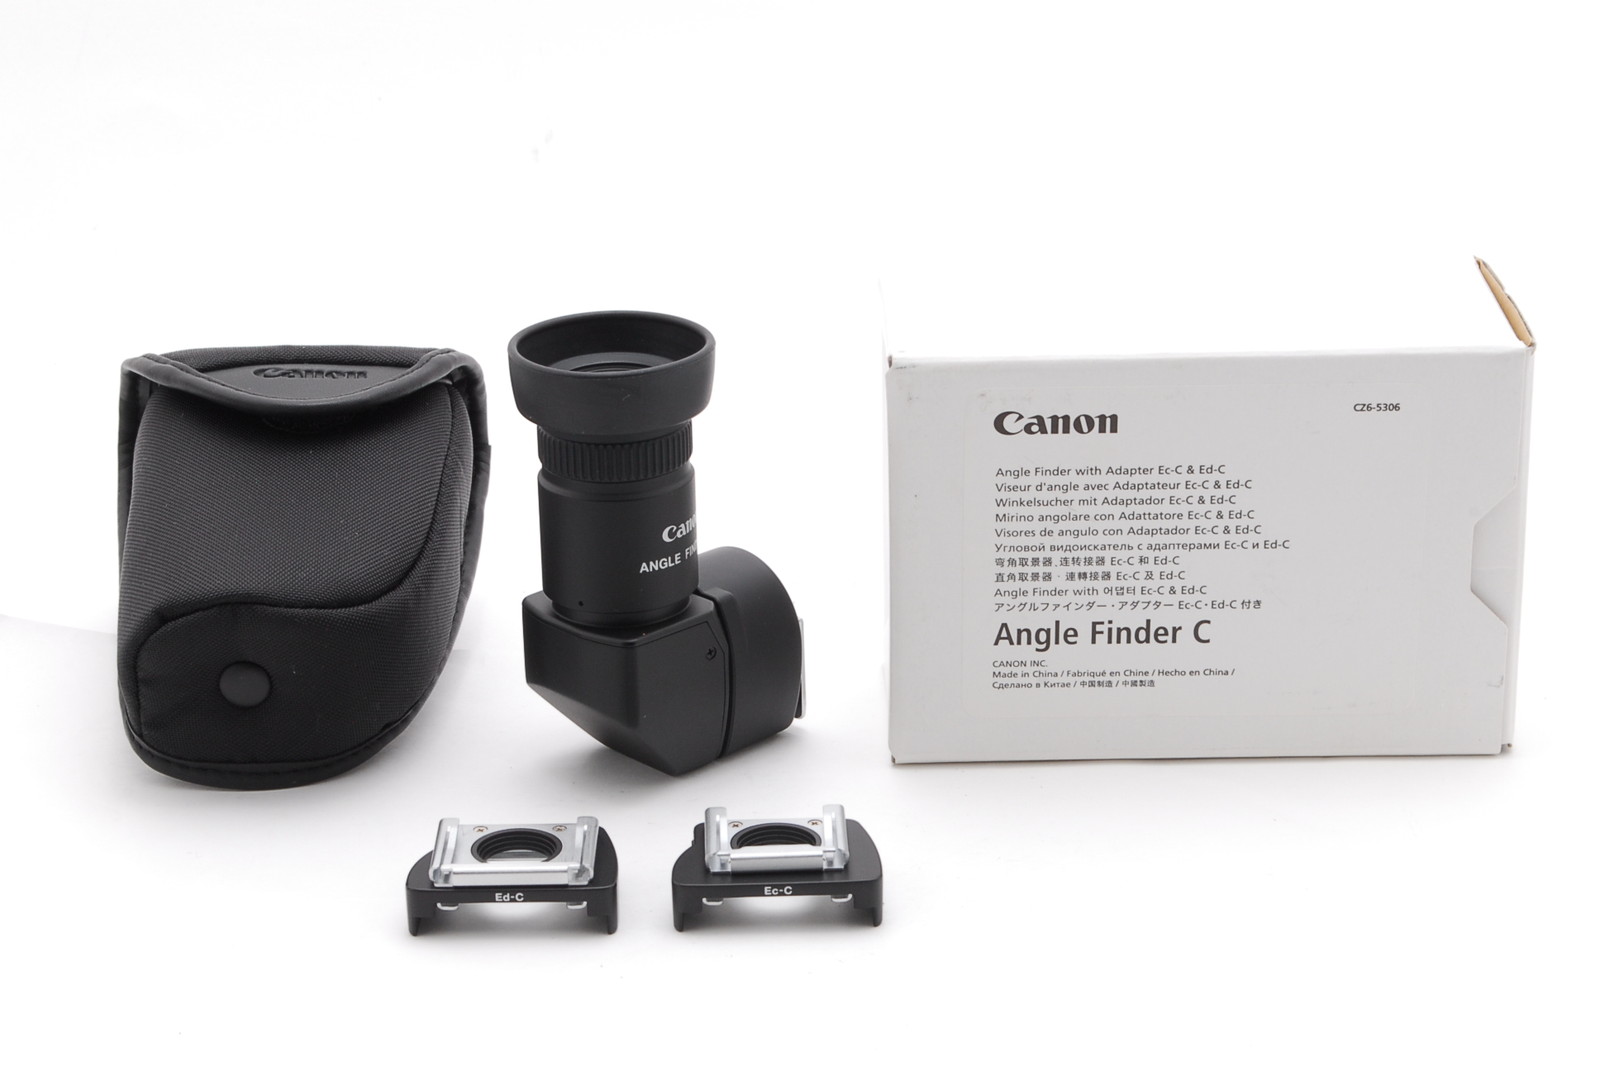 PROMOTION. MINT Canon Angle Finder C 1.25X 2.5X, Ec-C, Ed-C Adapter, Box, Case from Japan 完好佳能测角仪 C 1.25X 2.5X，Ec-C，Ed-C 适配器，盒子，日本保护壳